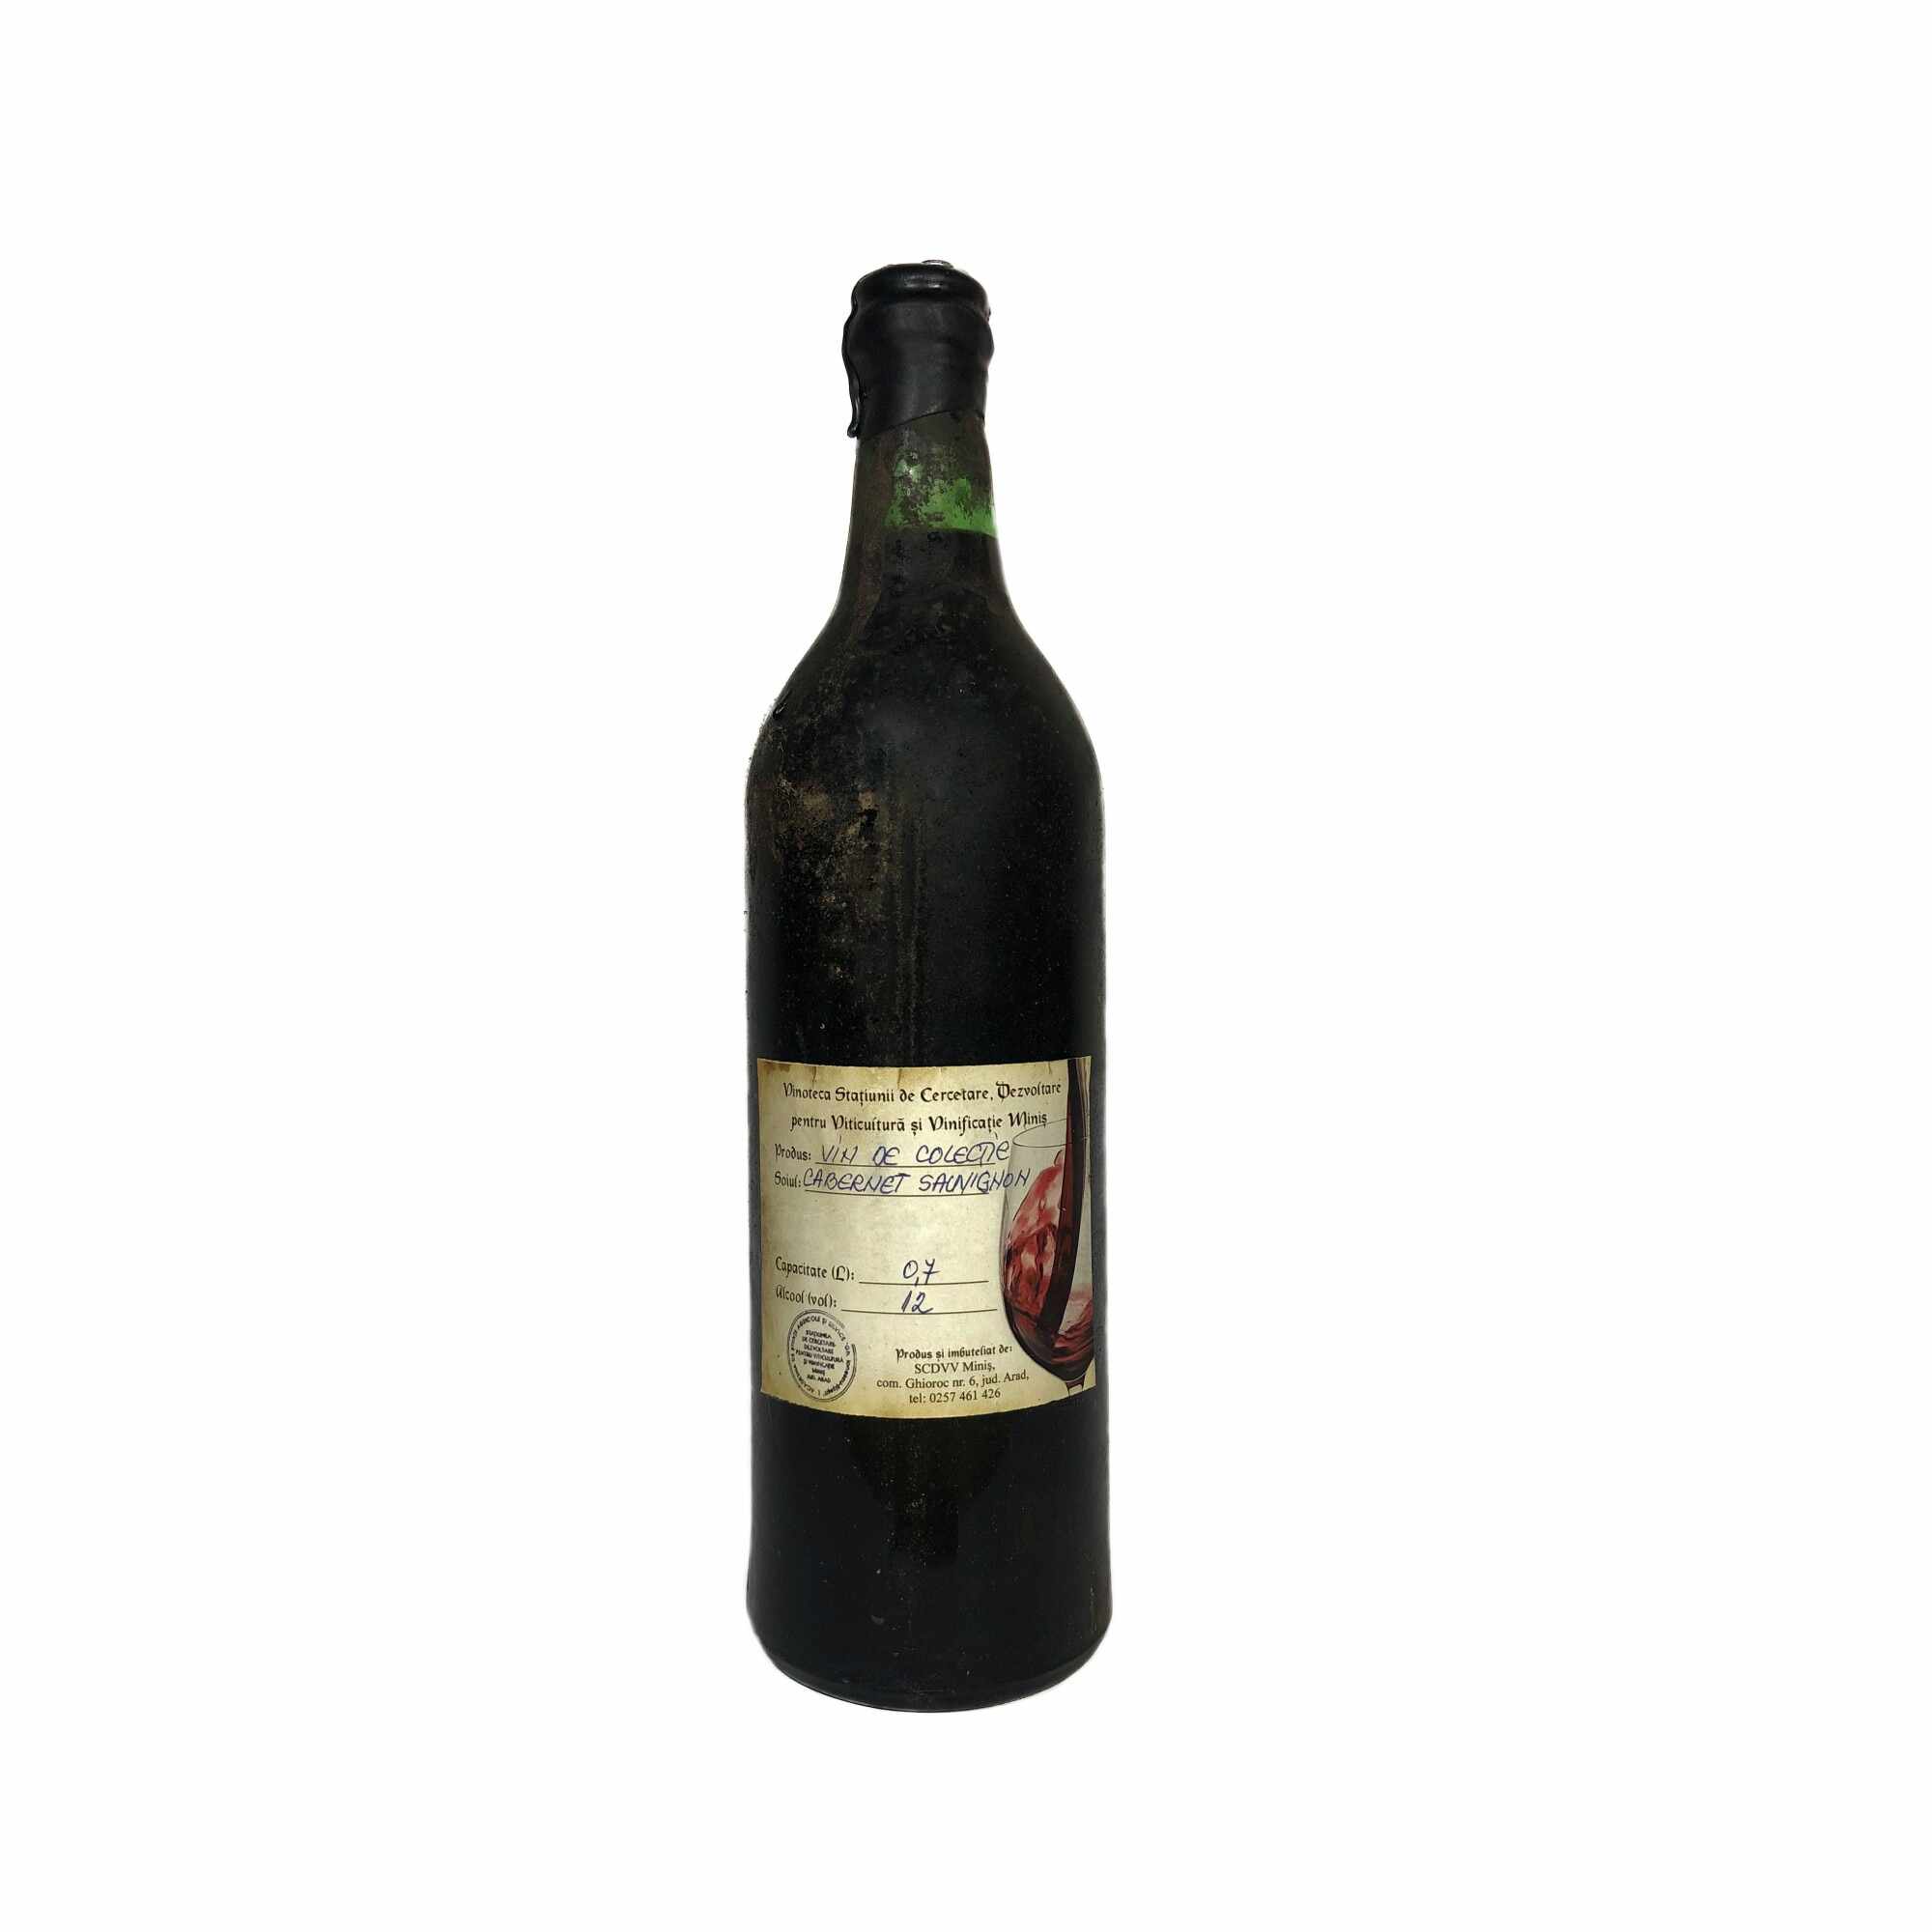 Vin rosu de colectie Cabernet Sauvignon - Anul 1981 in cutie de lemn, 700 ml